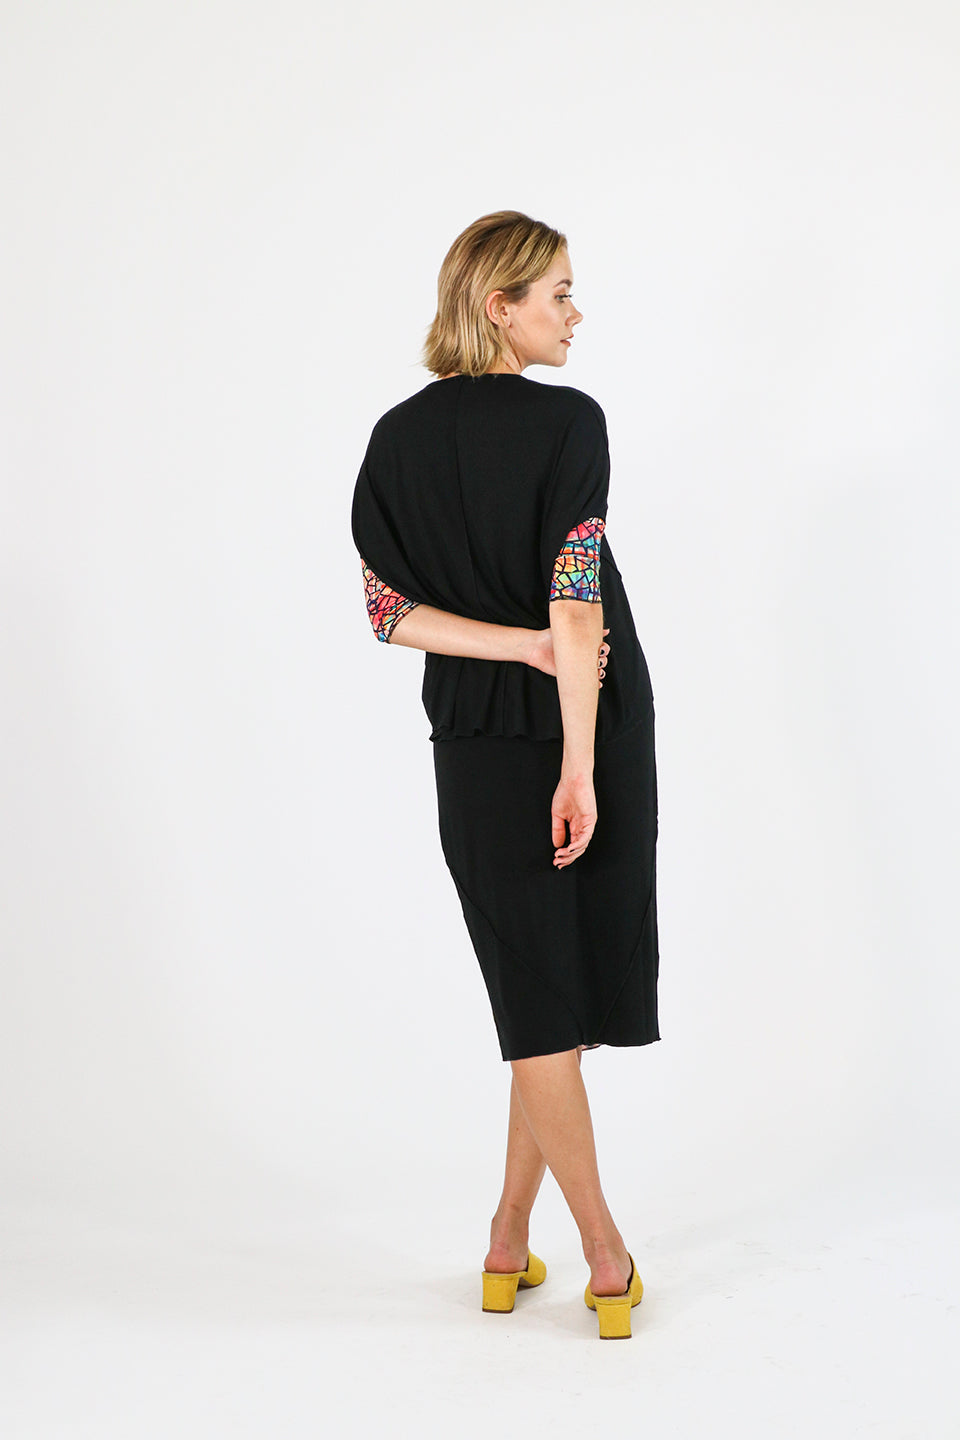 Etsu Pencil Skirt in Black Watercolor